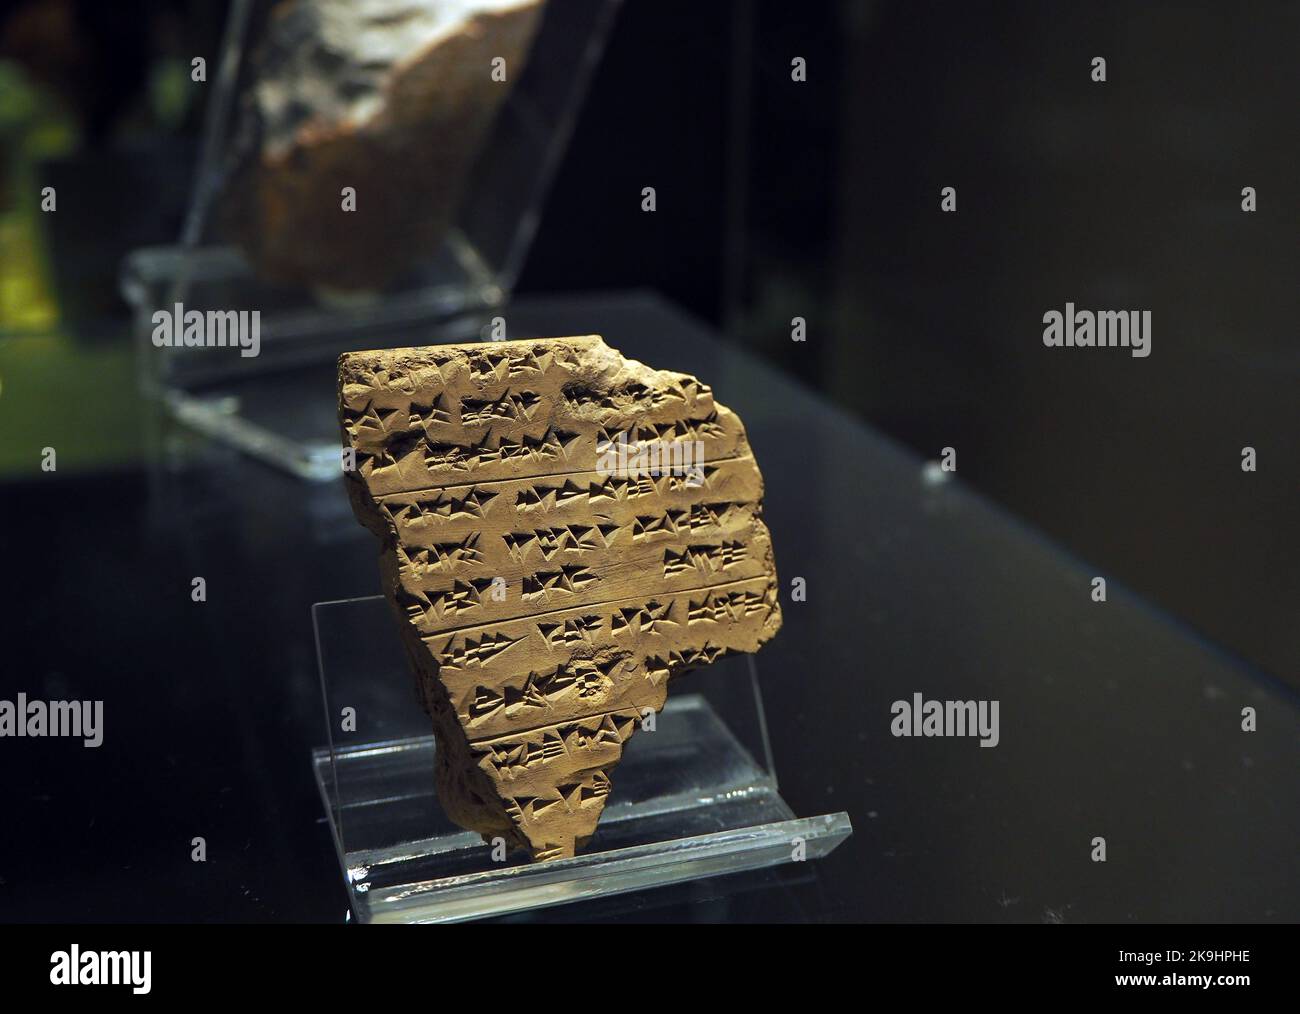 Tavolette di argilla cuneiforme assira di Kultepe esposte al Museo delle civiltà Anatoliche di Ankara, Türkiye Foto Stock